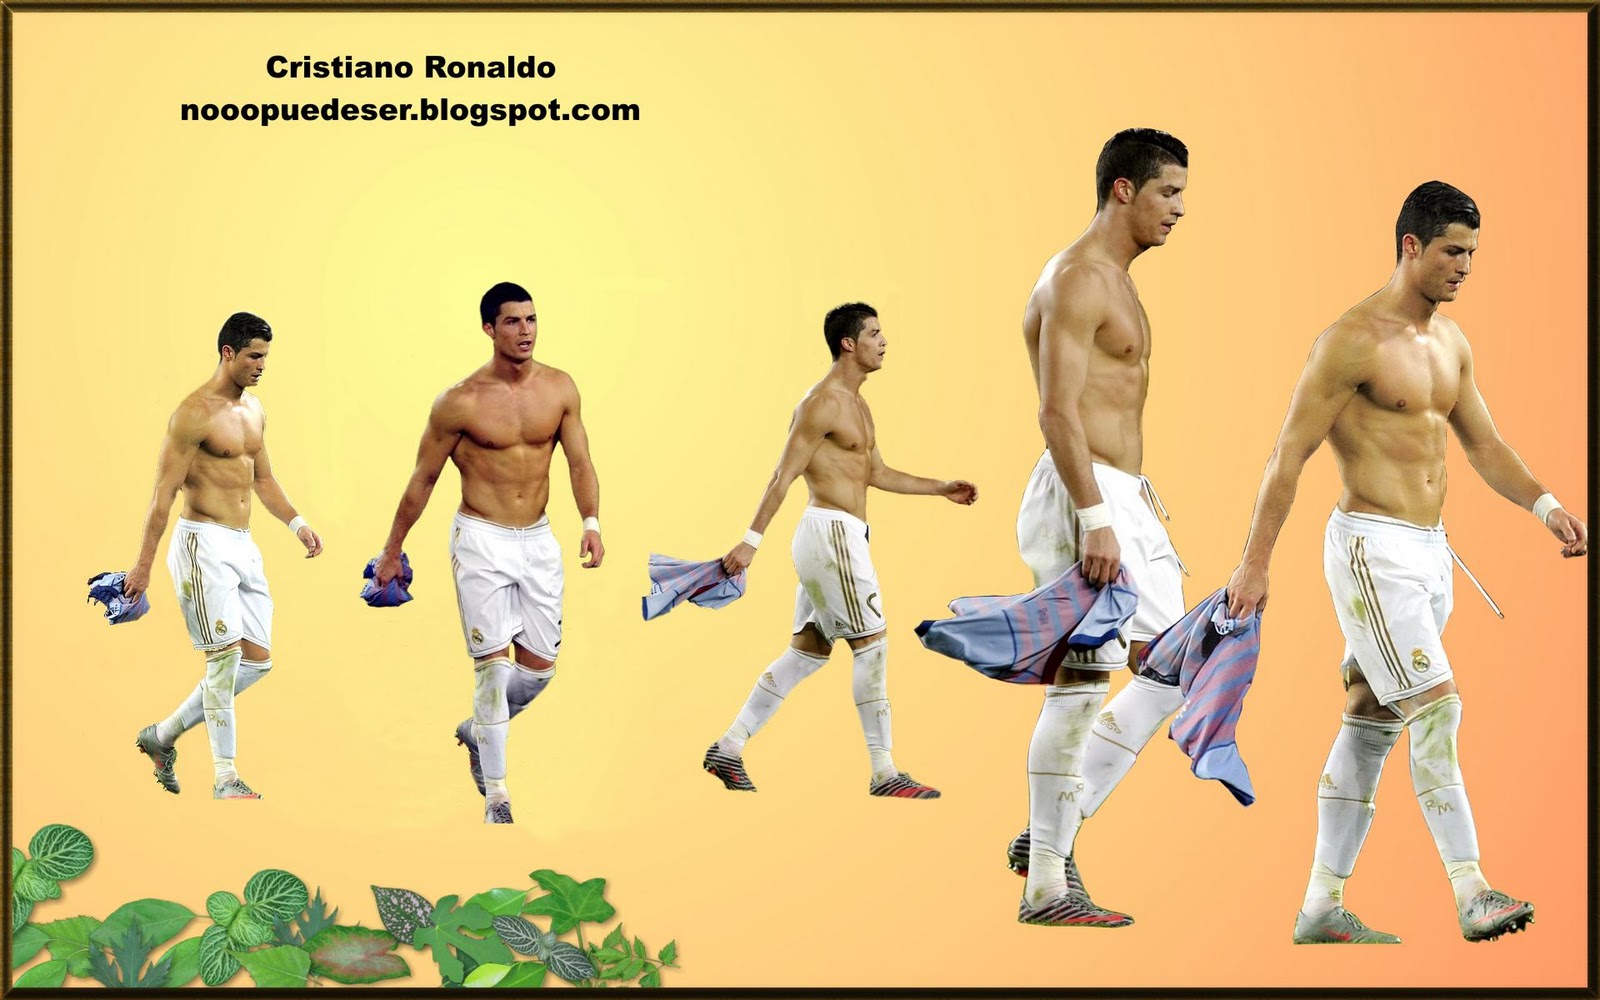 http://1.bp.blogspot.com/-ho9CVwBbJF4/TyF0_Lj50rI/AAAAAAAAIec/cnICb-UtbIA/s1600/Cristiano-Ronaldo-07.jpg